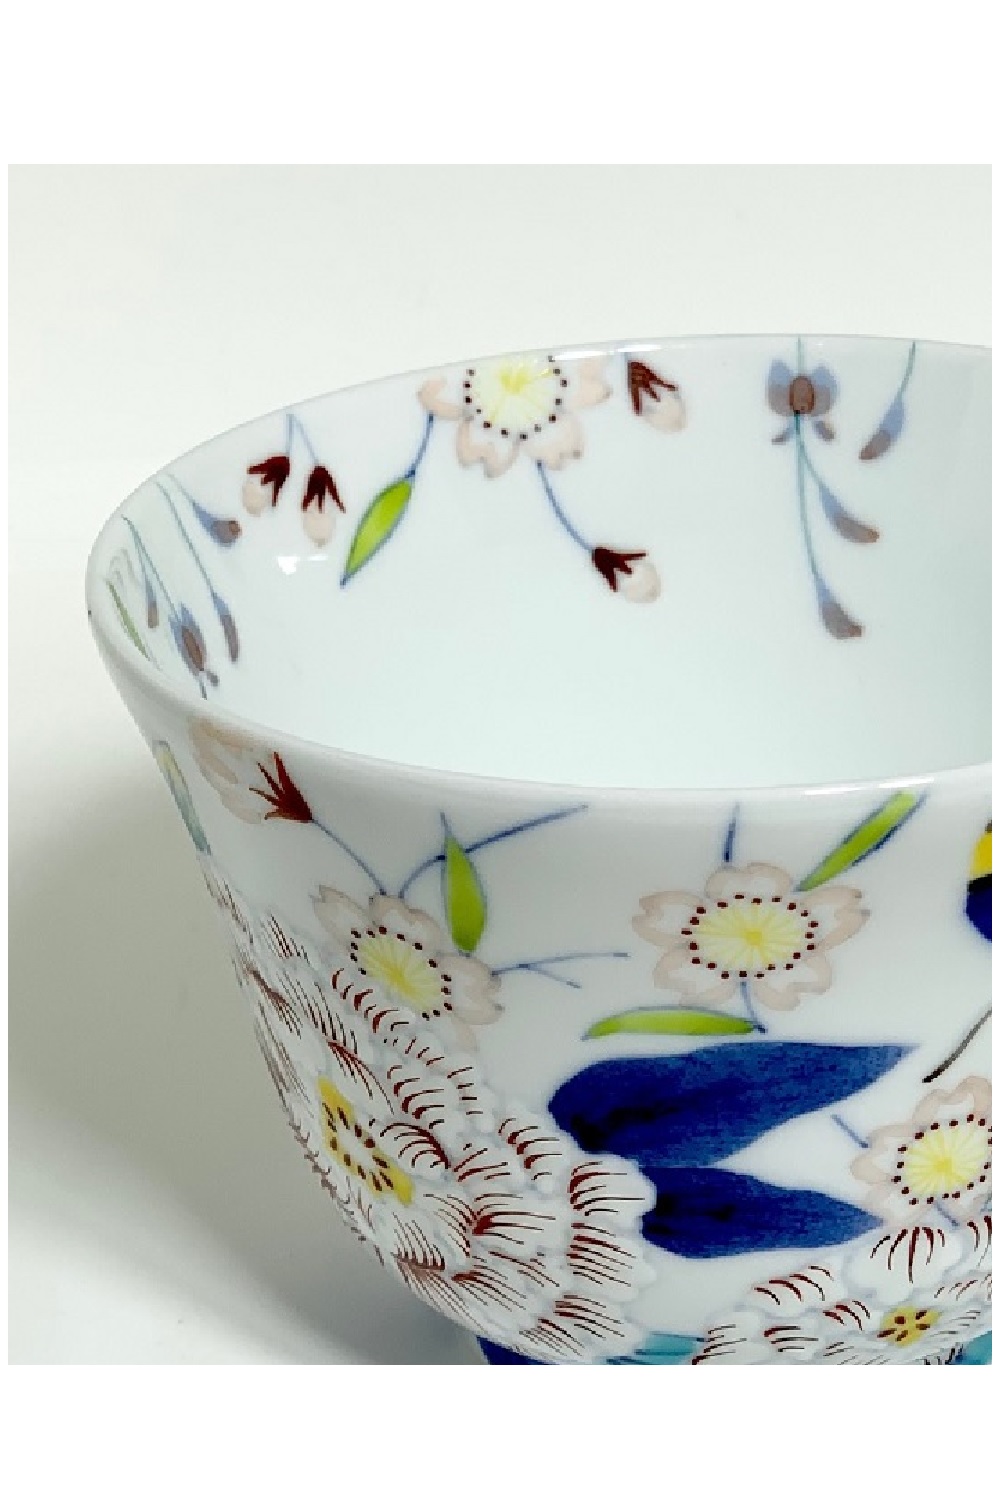 KEITAMARUYAMA オリジナル陶器【花と蝶】 詳細画像 マルチ 3